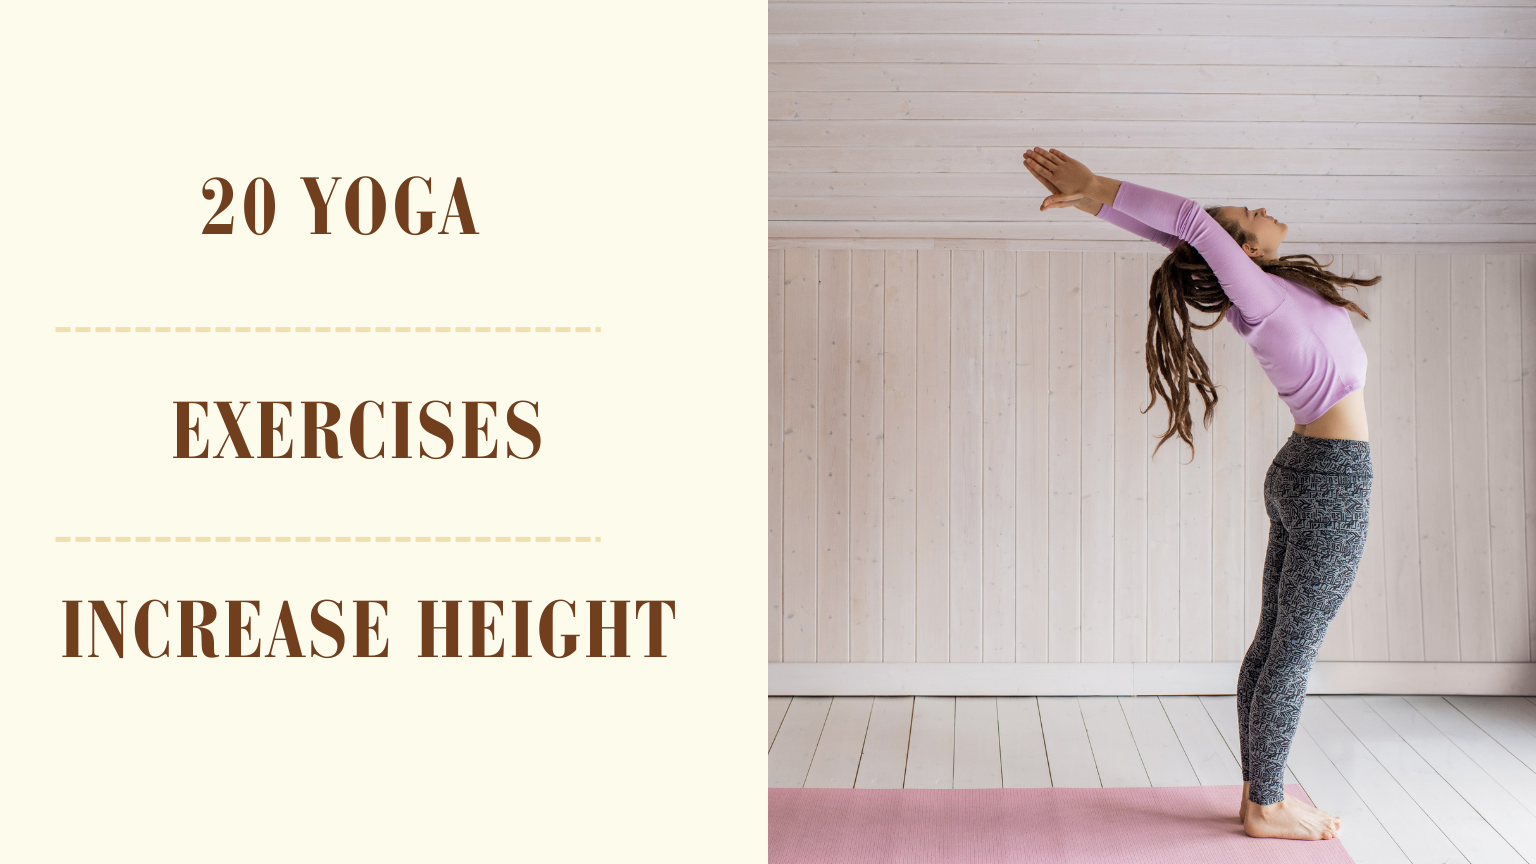 Yoga poses for hypothyroidism!... - Ojas Yoga and Wellness | Facebook